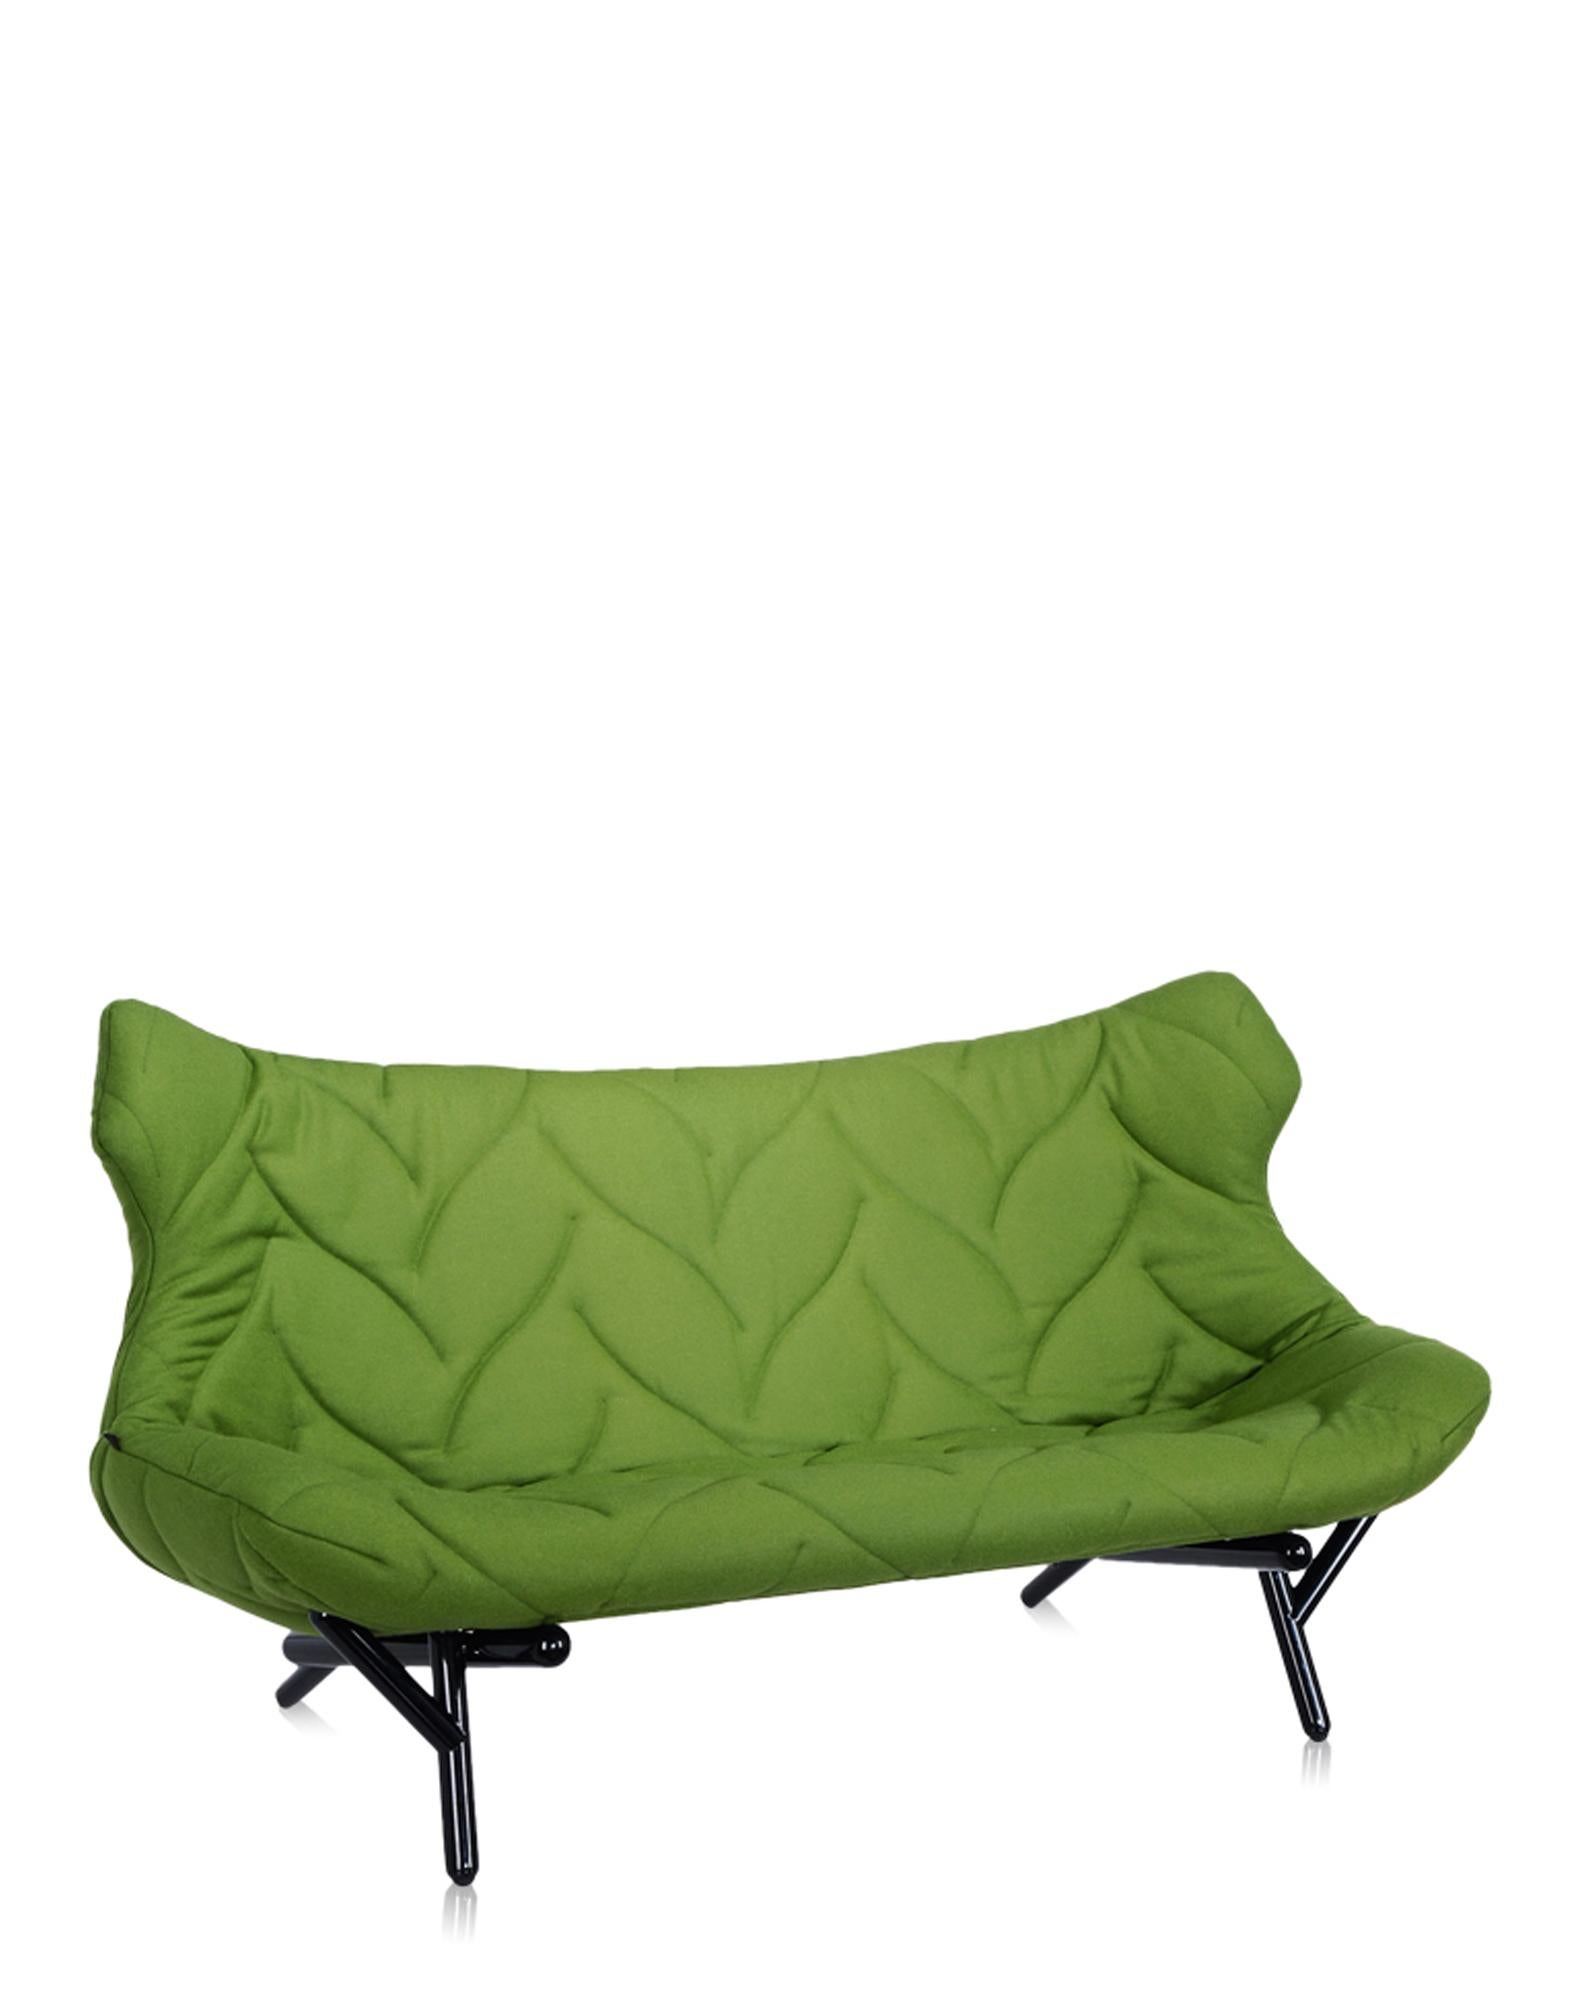 Contemporary Kartell Foliage Sofa Trevira Green by Patricia Urquiola  For Sale